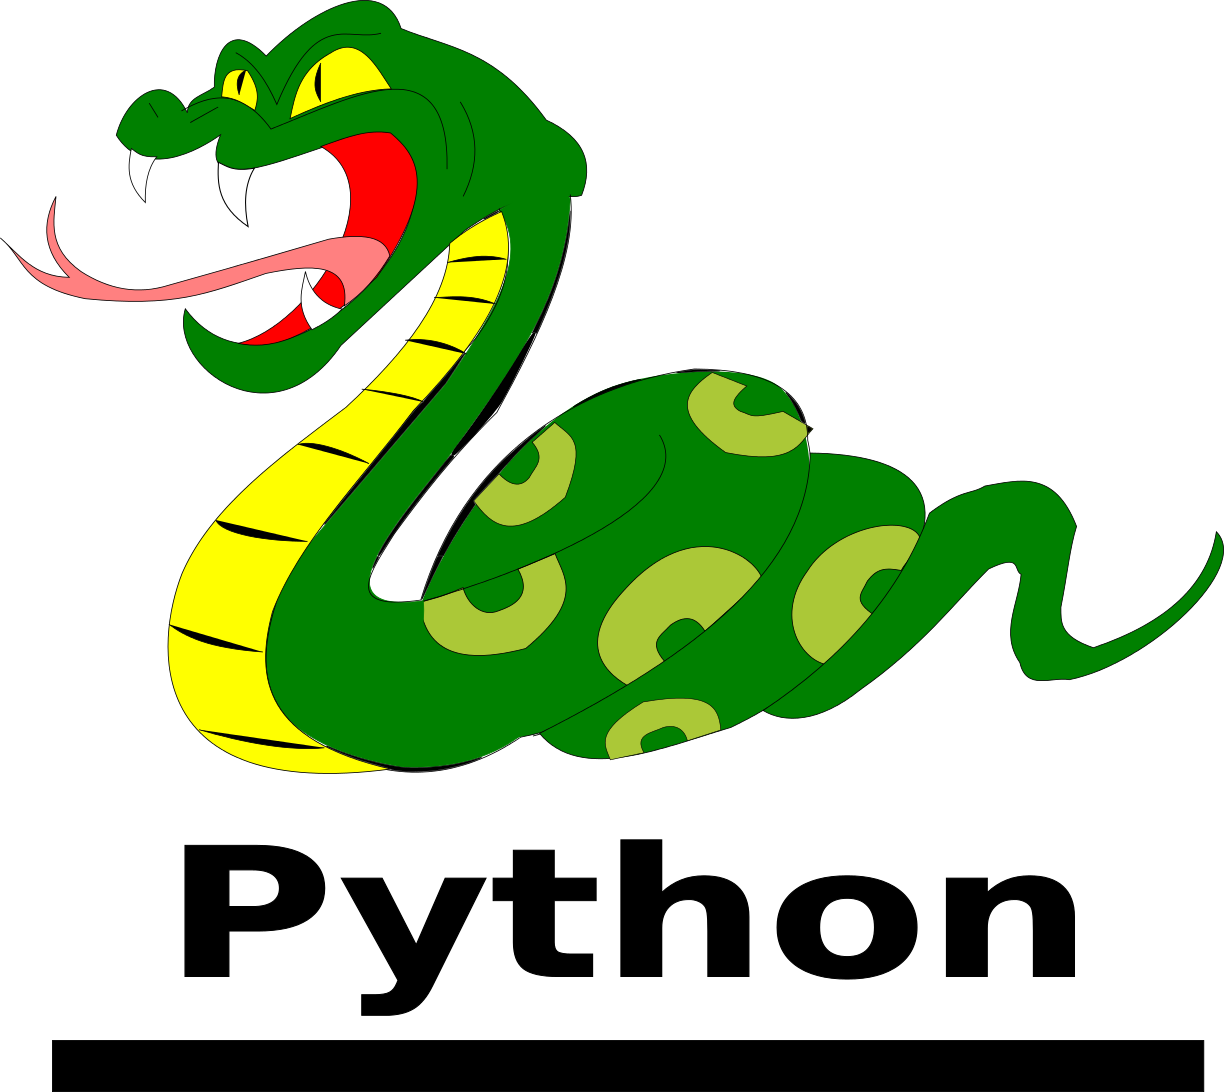 Логотип языка python. Значок питона. Python логотип. Питон язык программирования логотип. Питон ICO.